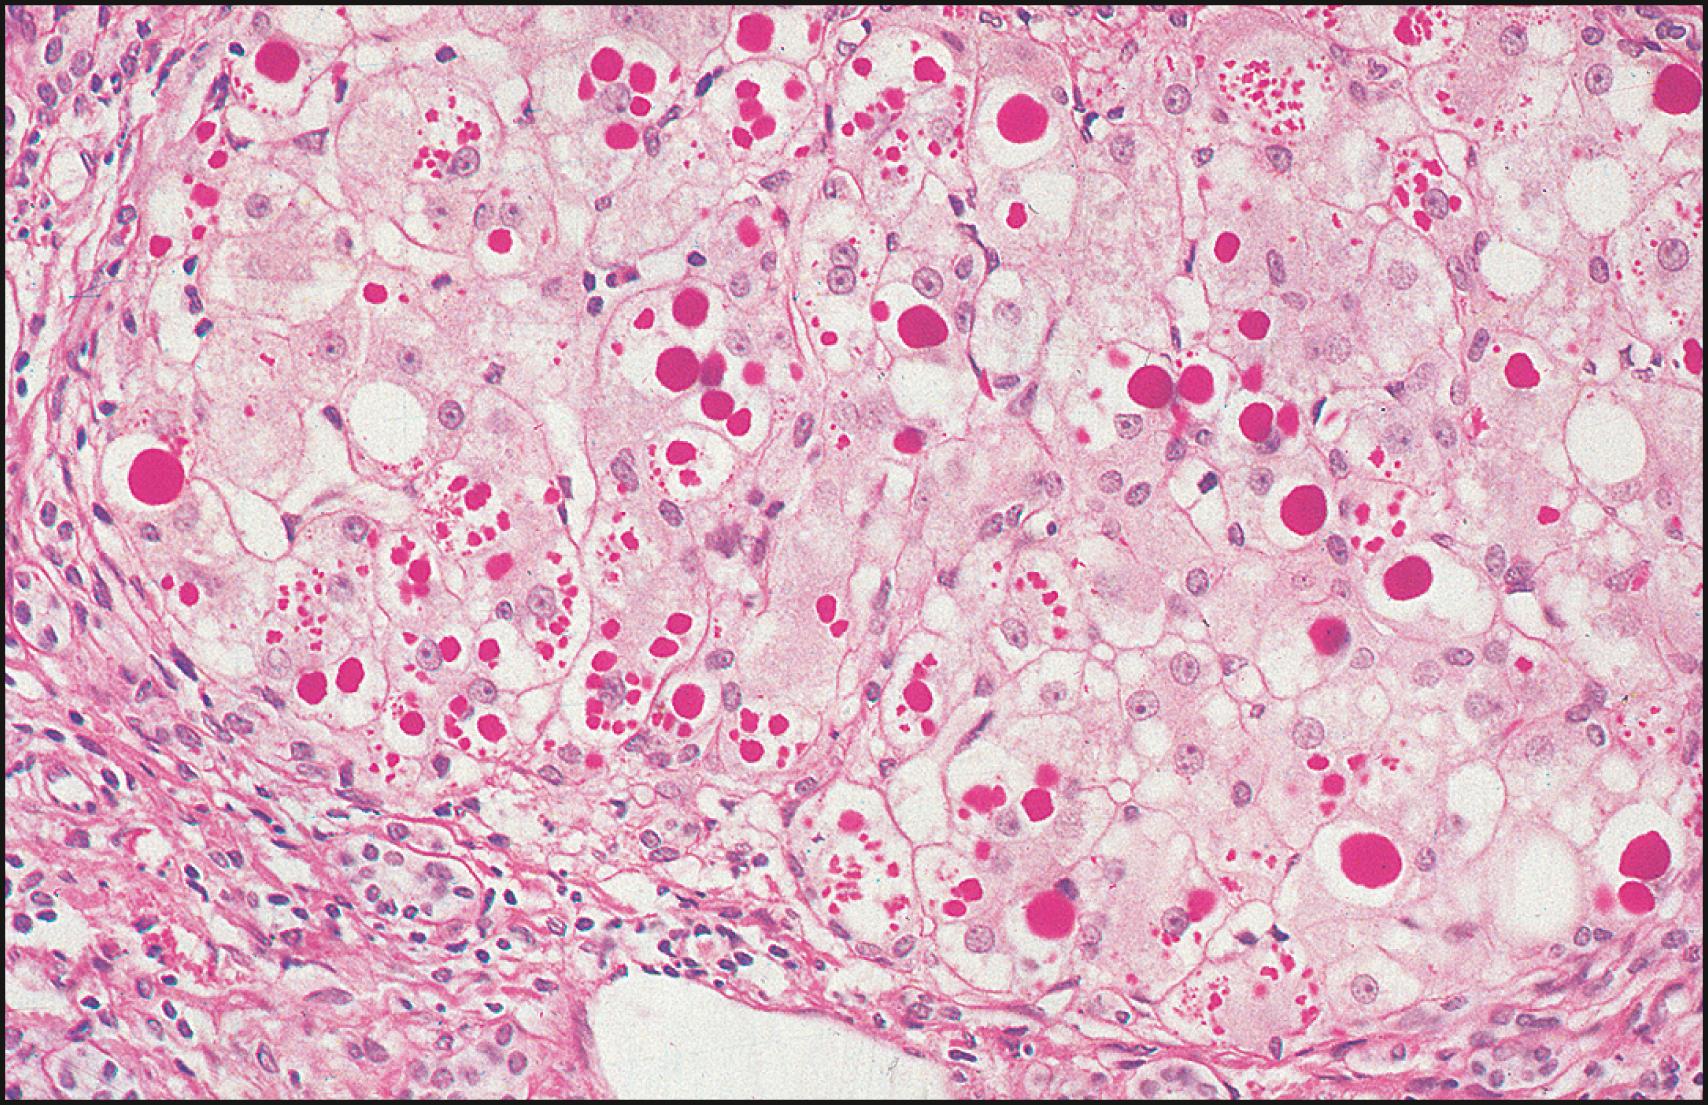 Fig. 77.1, Liver histology in α 1 -antitrypsin deficiency.